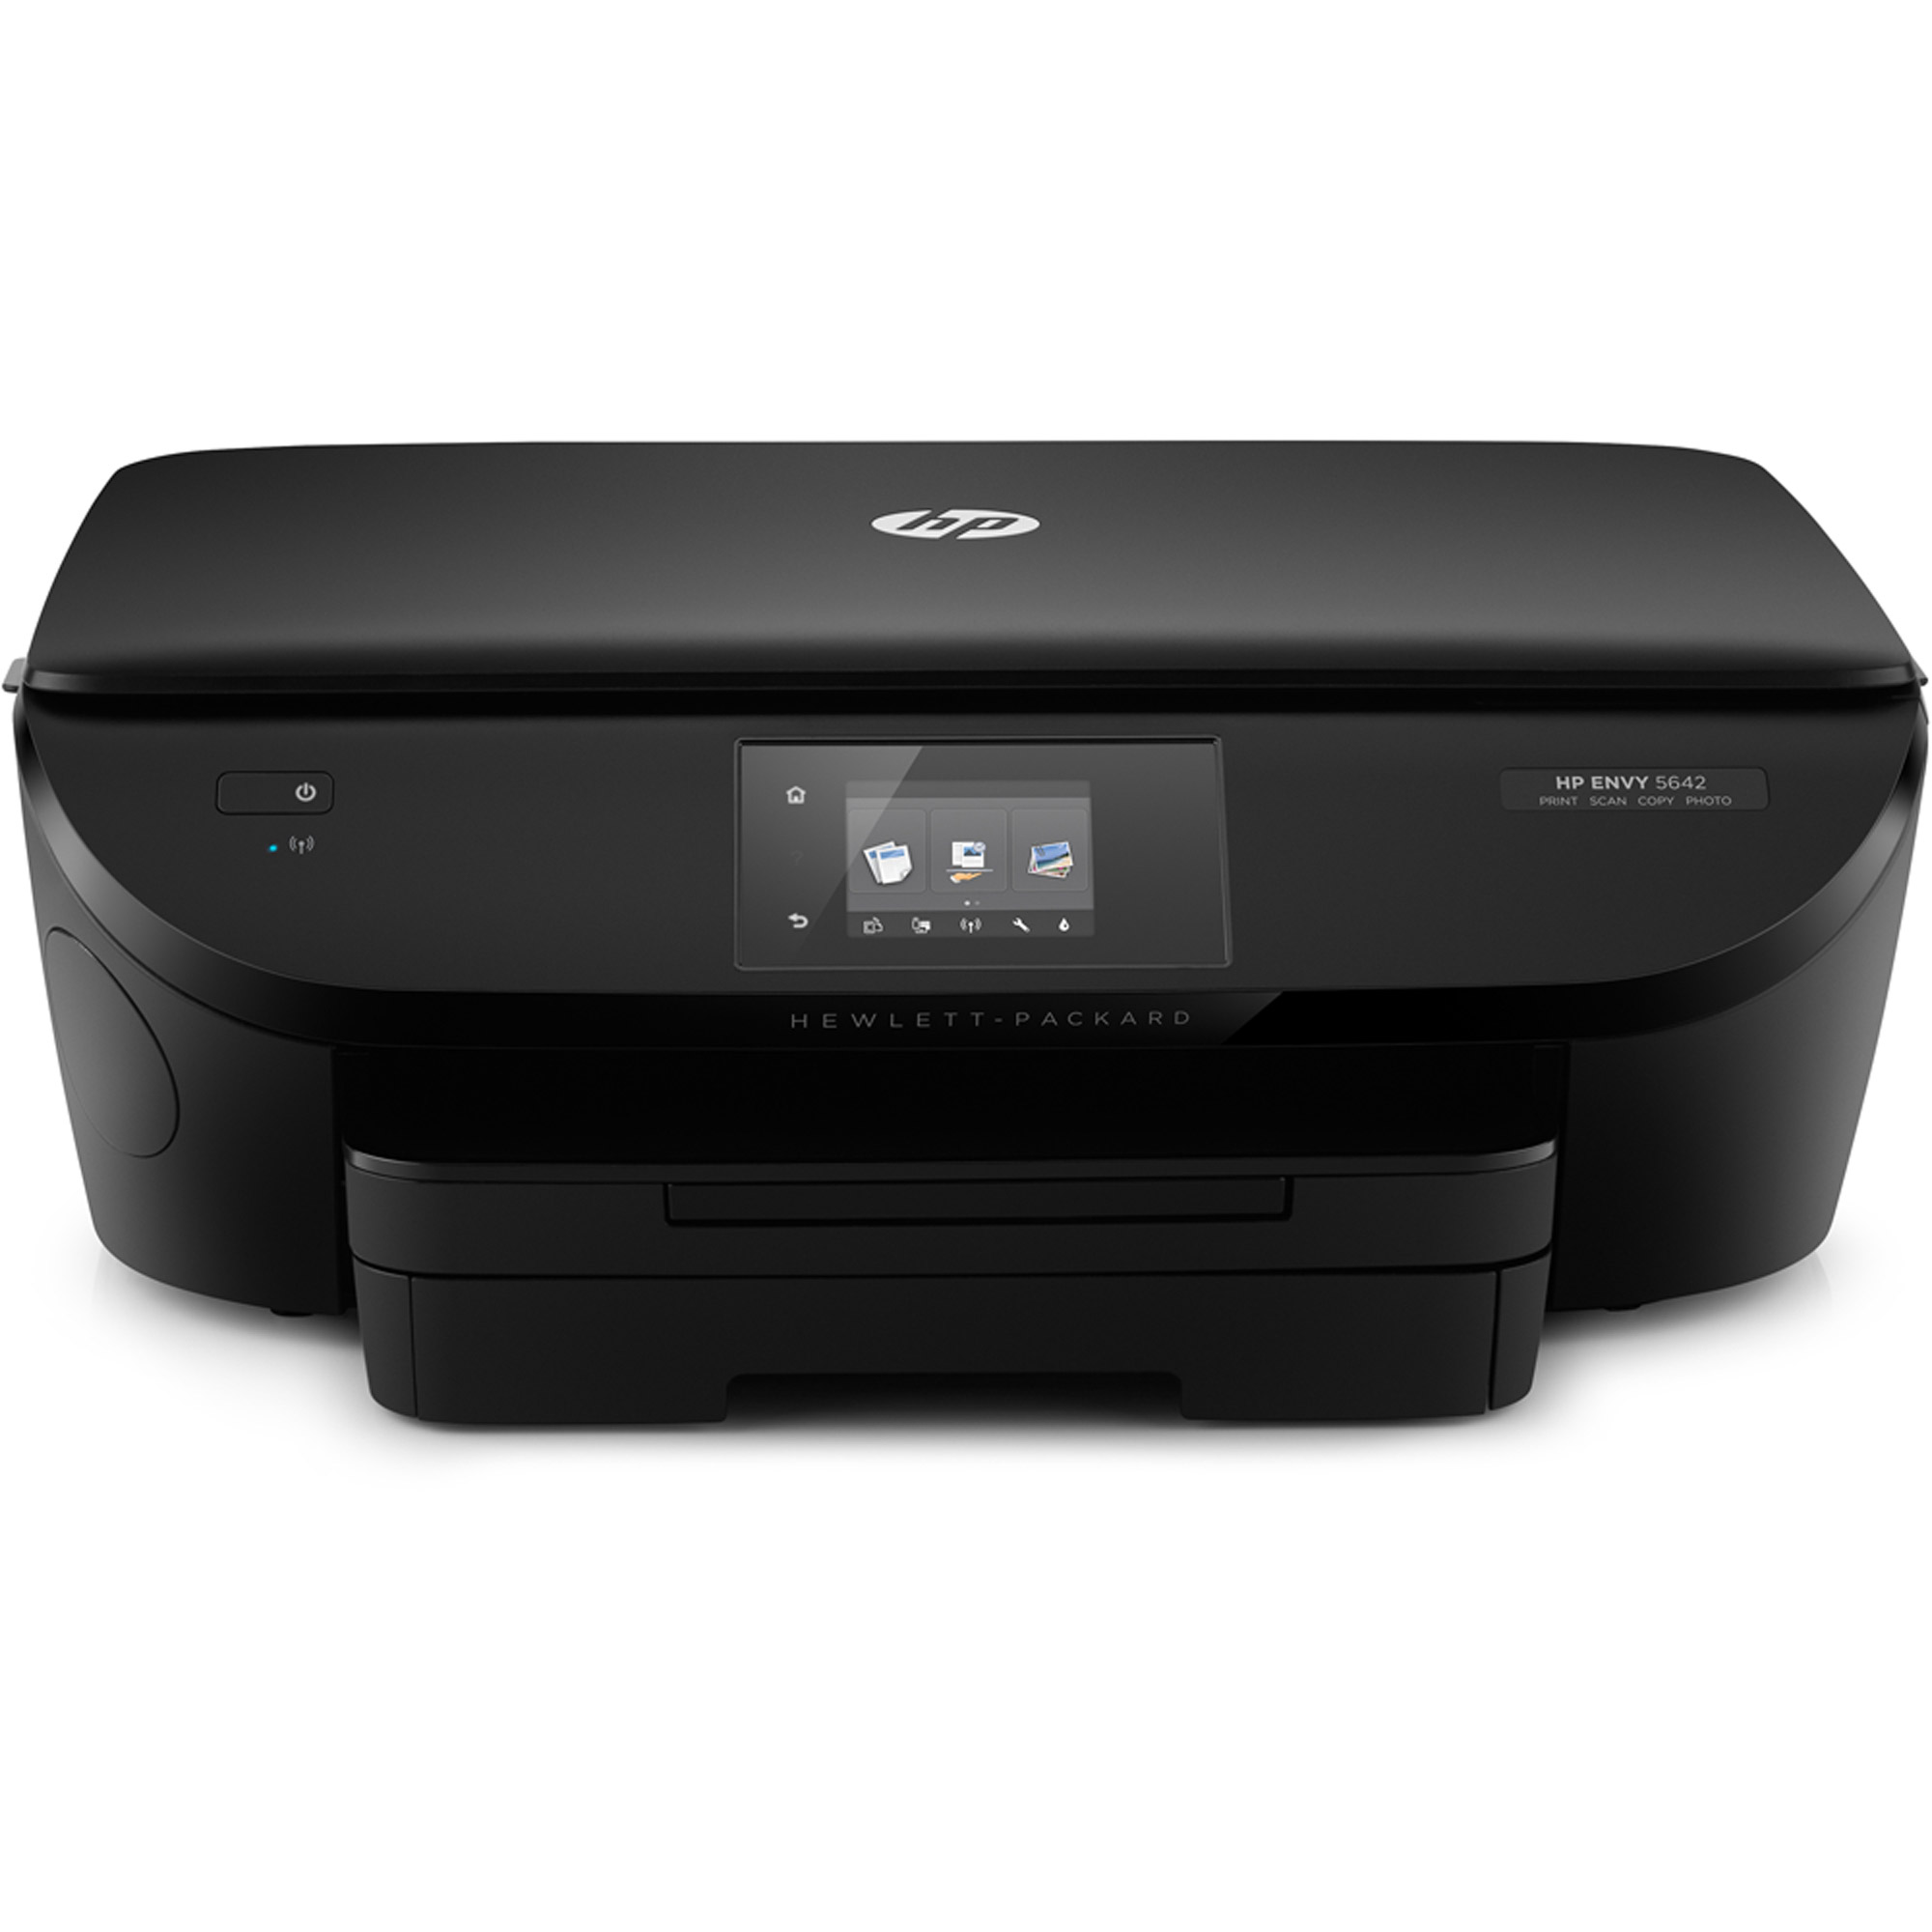 HP Envy 5642 All-in-One Printer/Copier/Scanner - image 1 of 4